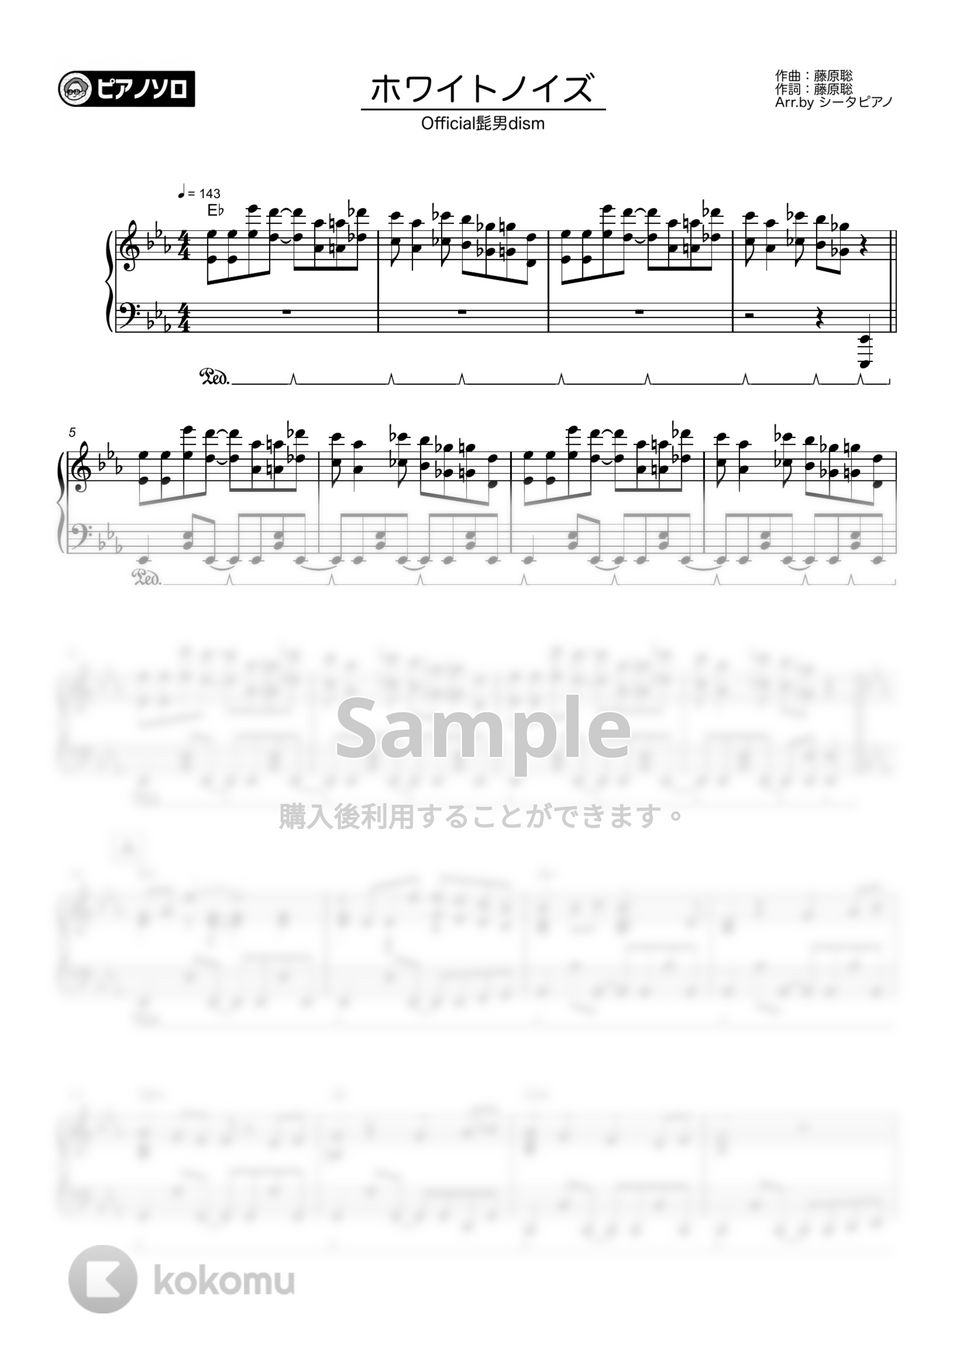 Official髭男dism - ホワイトノイズ by シータピアノ